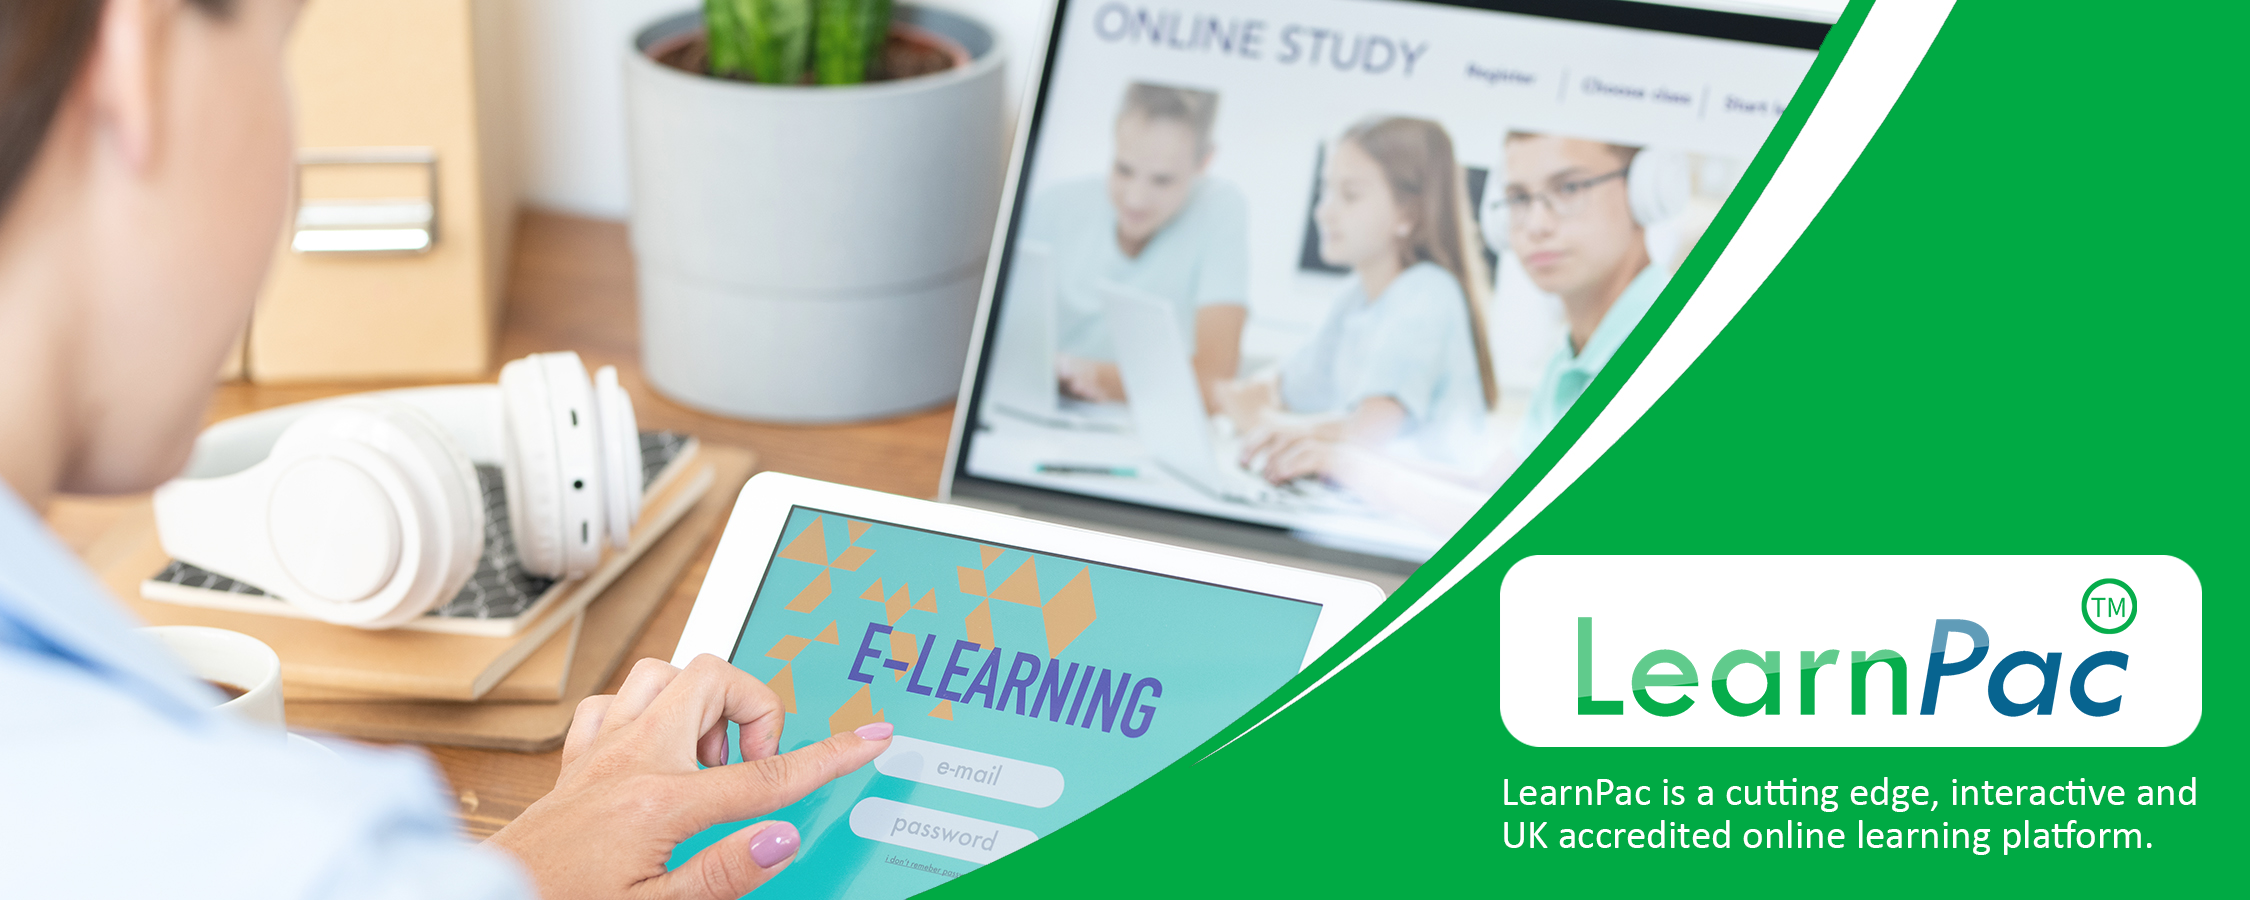 Business Ethics Training - Online Learning Courses - E-Learning Courses - LearnPac Systems UK -